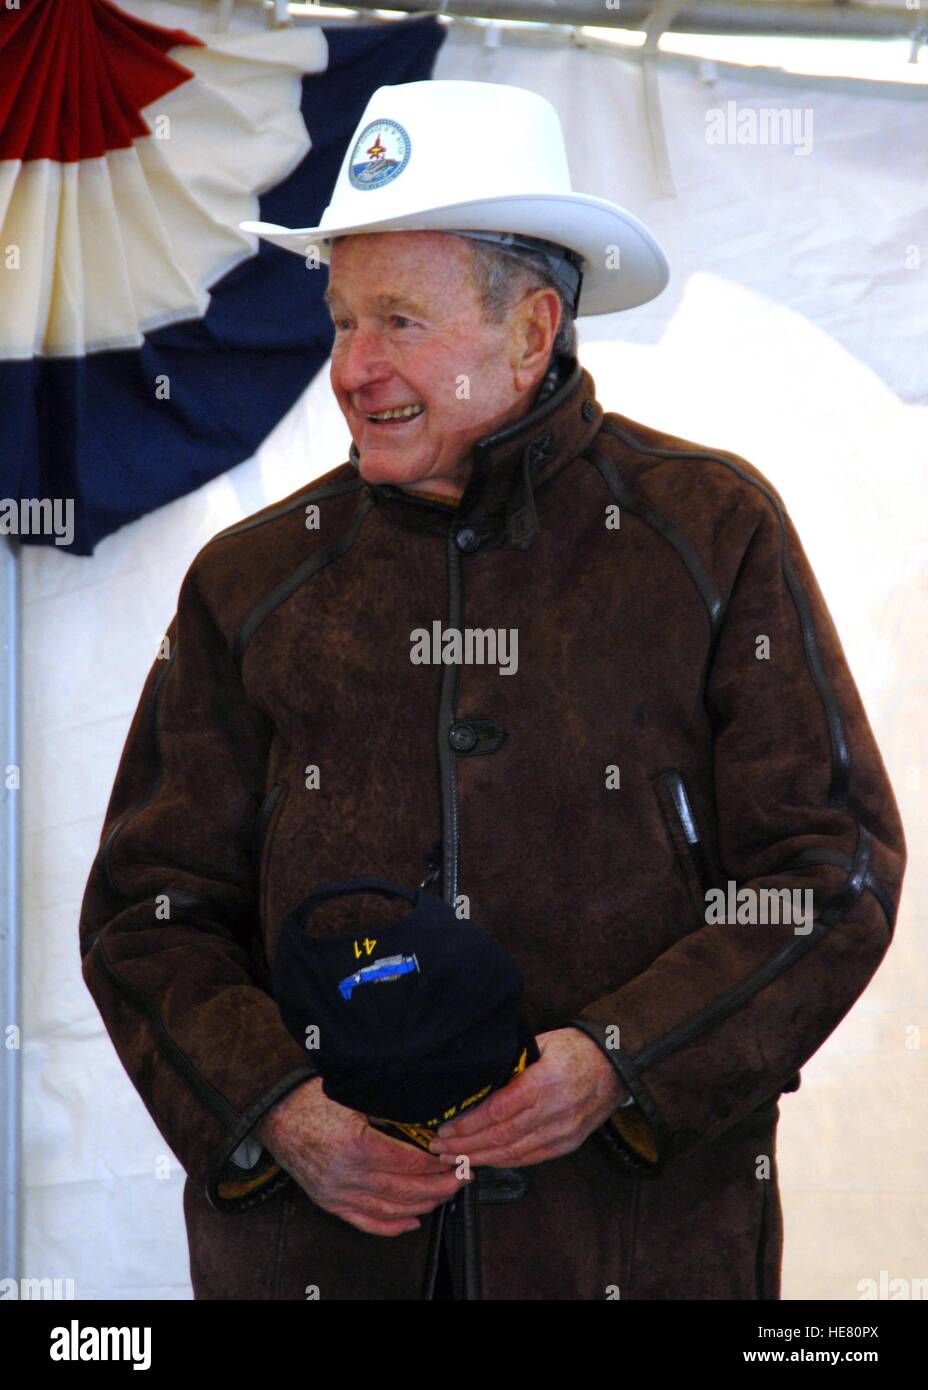 former-us-president-george-hw-bush-wears-a-cowboy-style-hard-hat-while-HE80PX.jpg